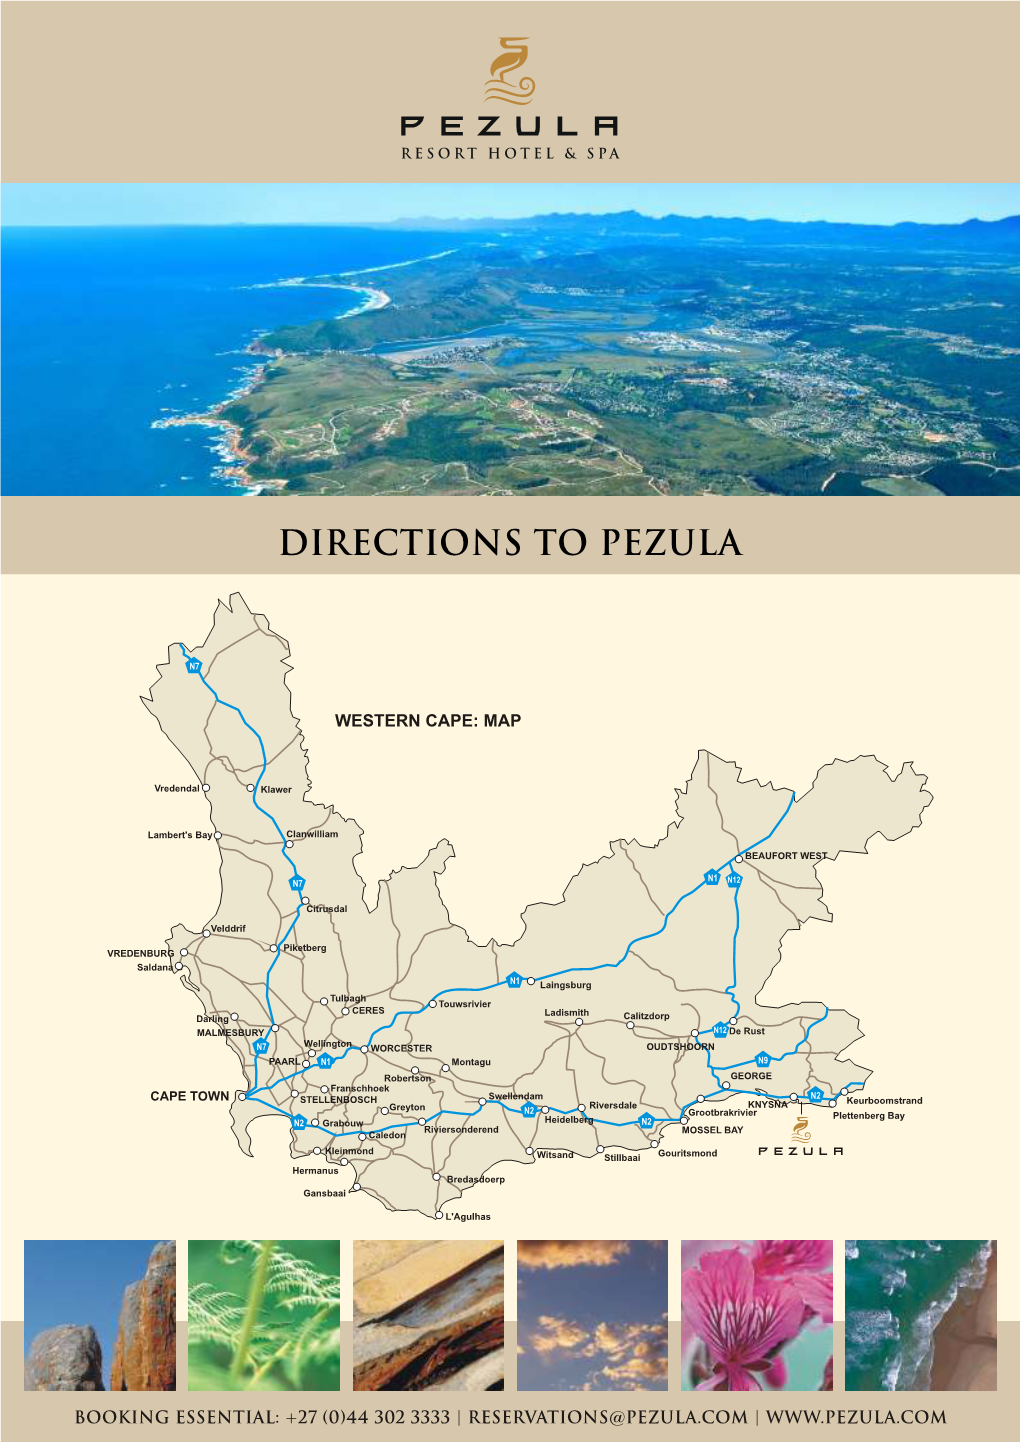 Directions to Pezula